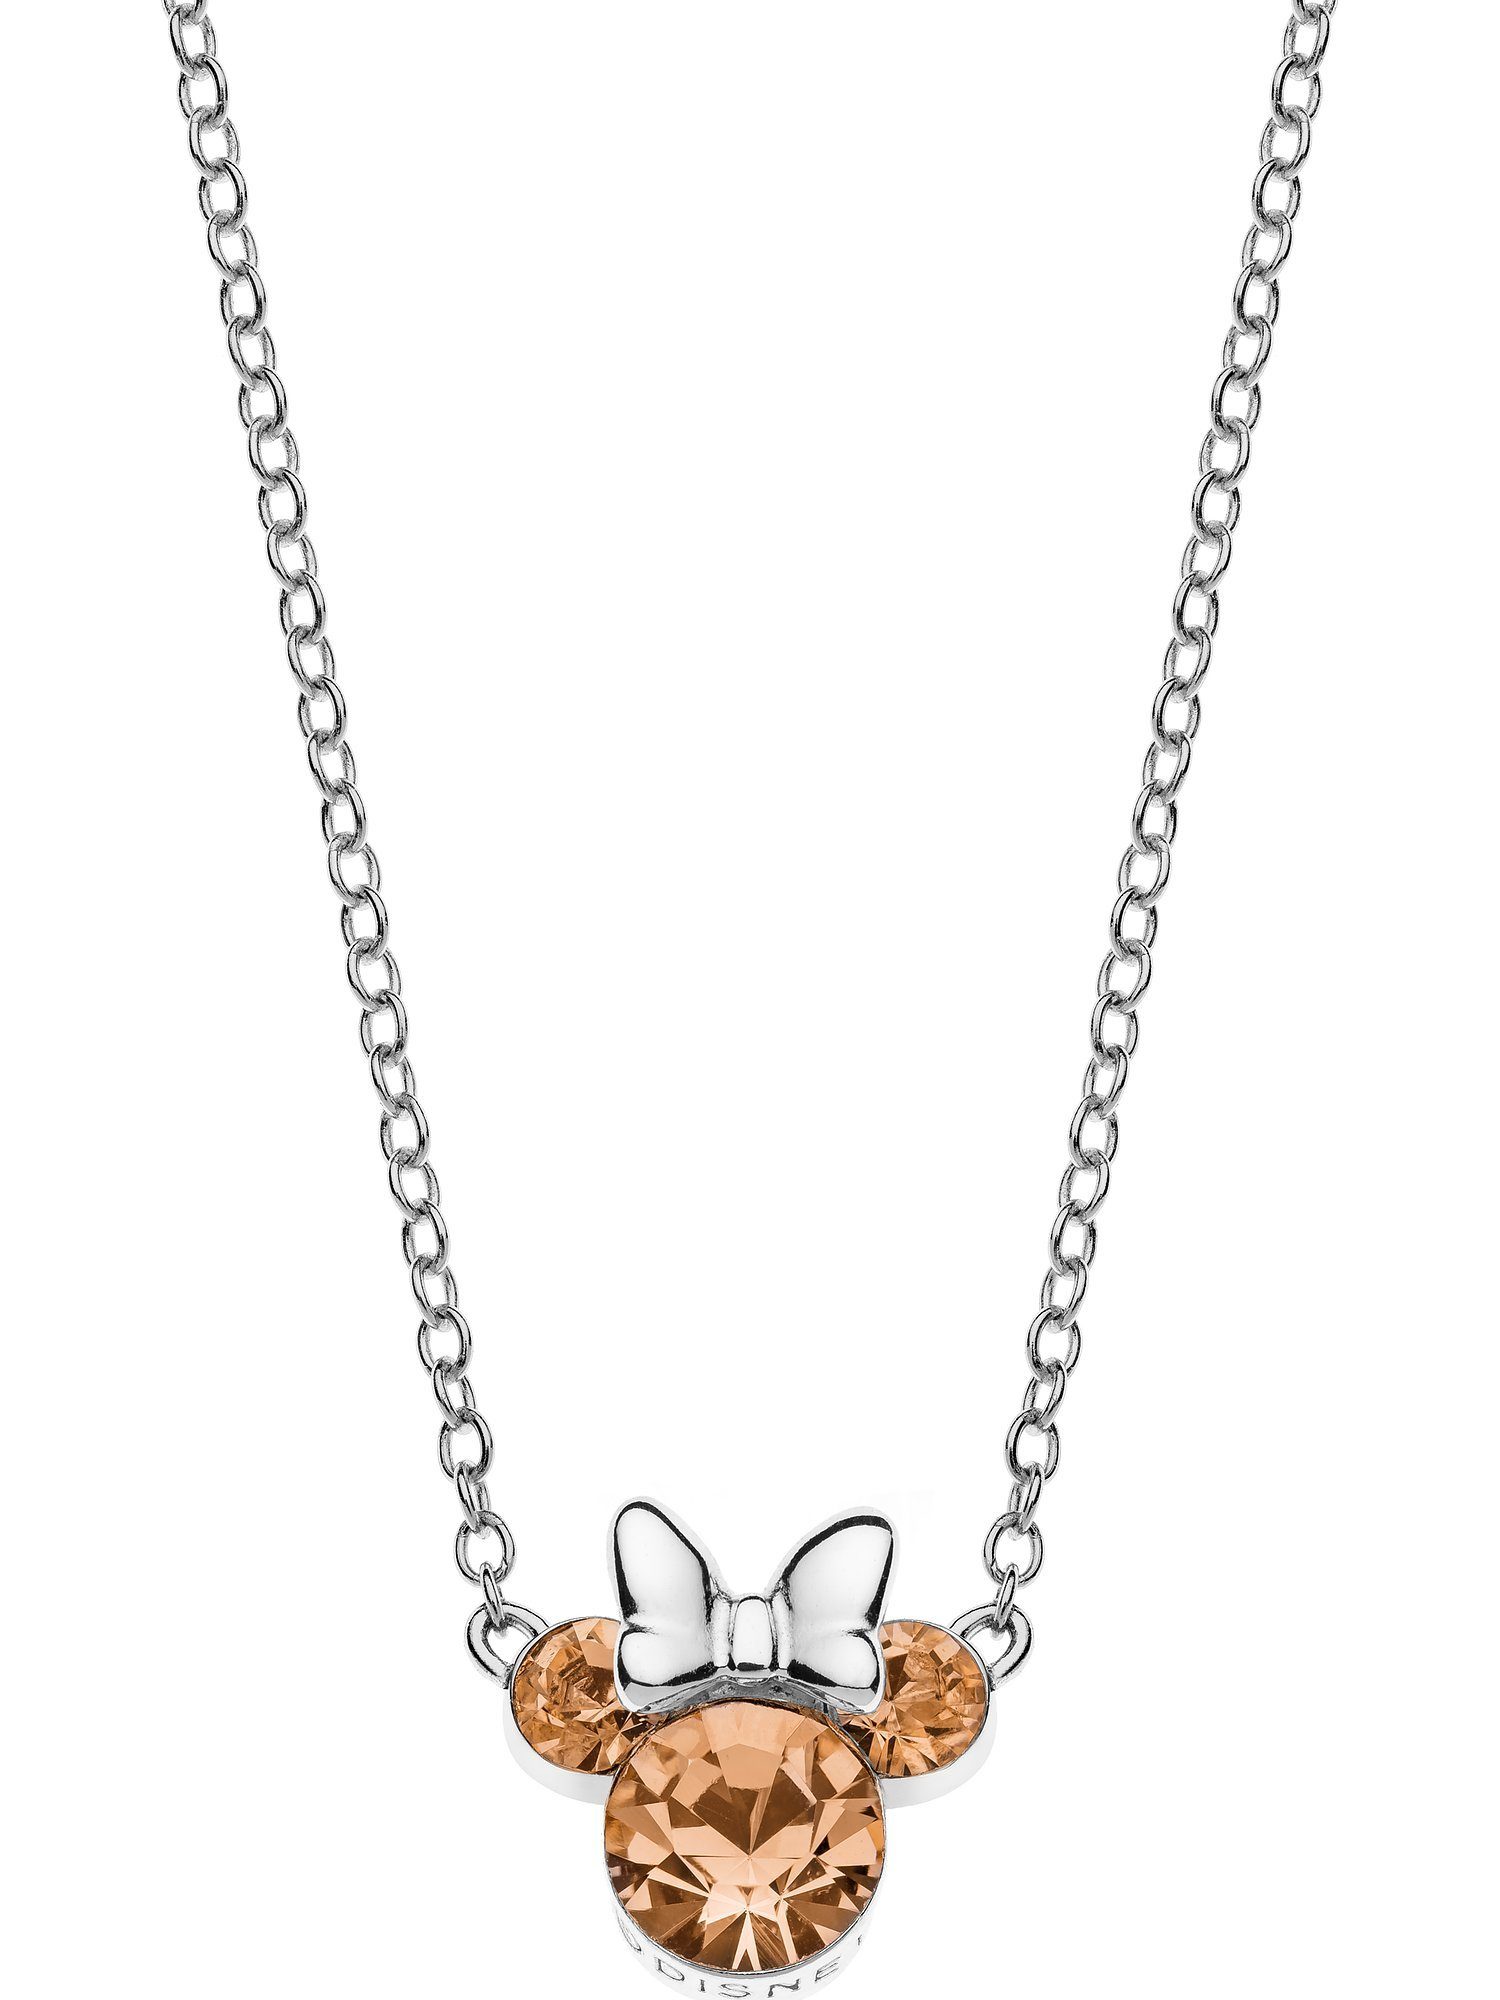 Collier Kristall apricot 1 DISNEY Mädchen-Kinderkette Disney Silber 925er Jewelry